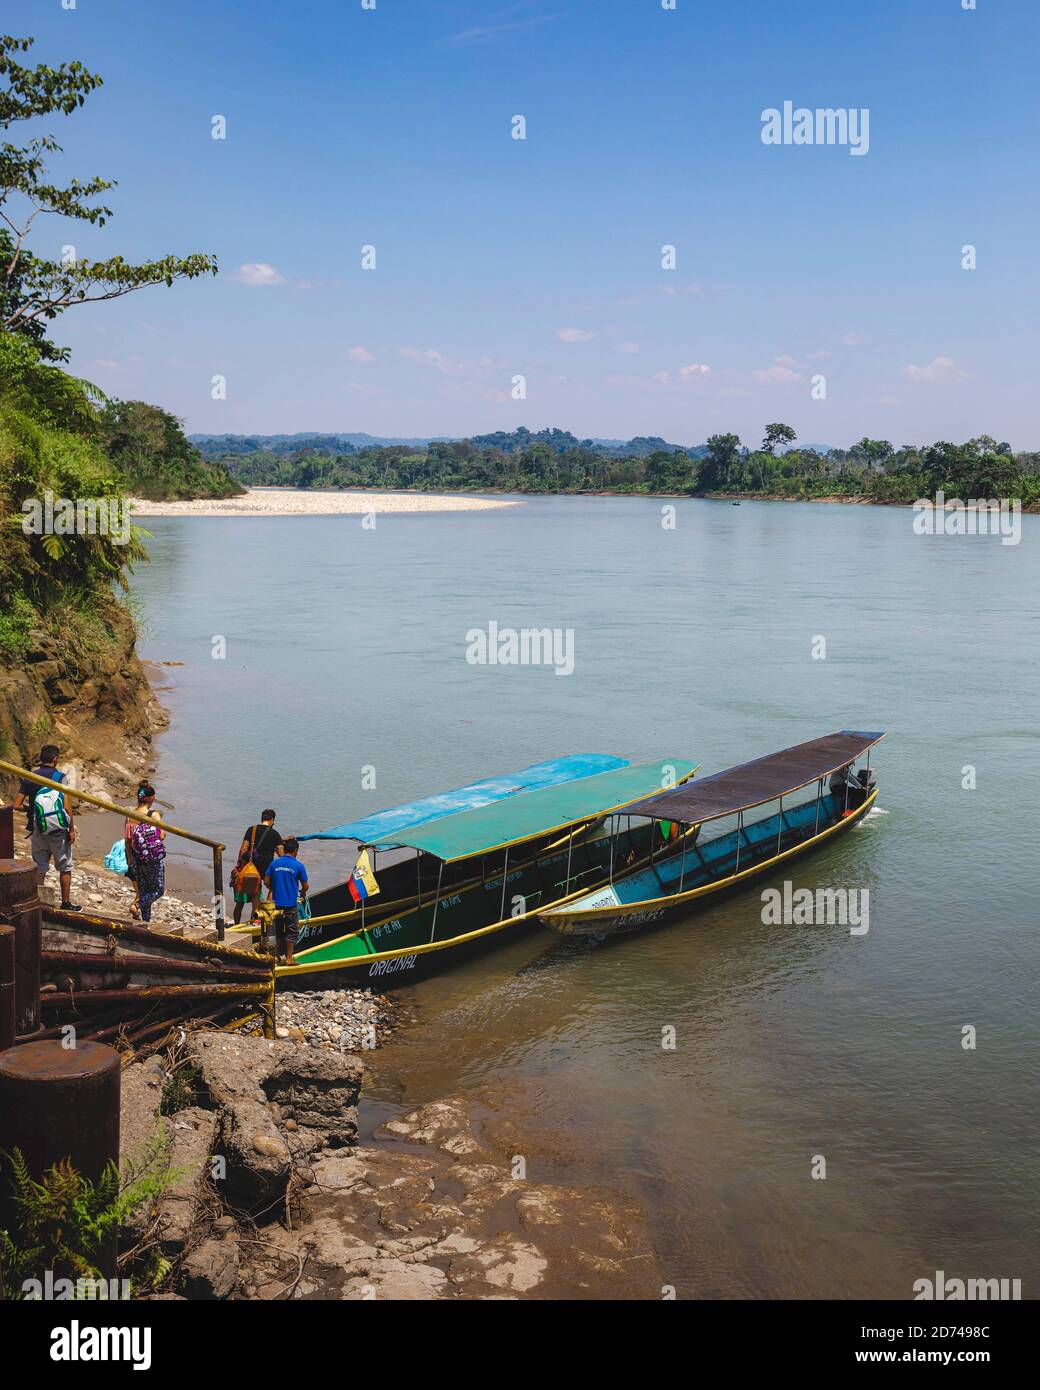 Amazon River boat tourism Stock Photo